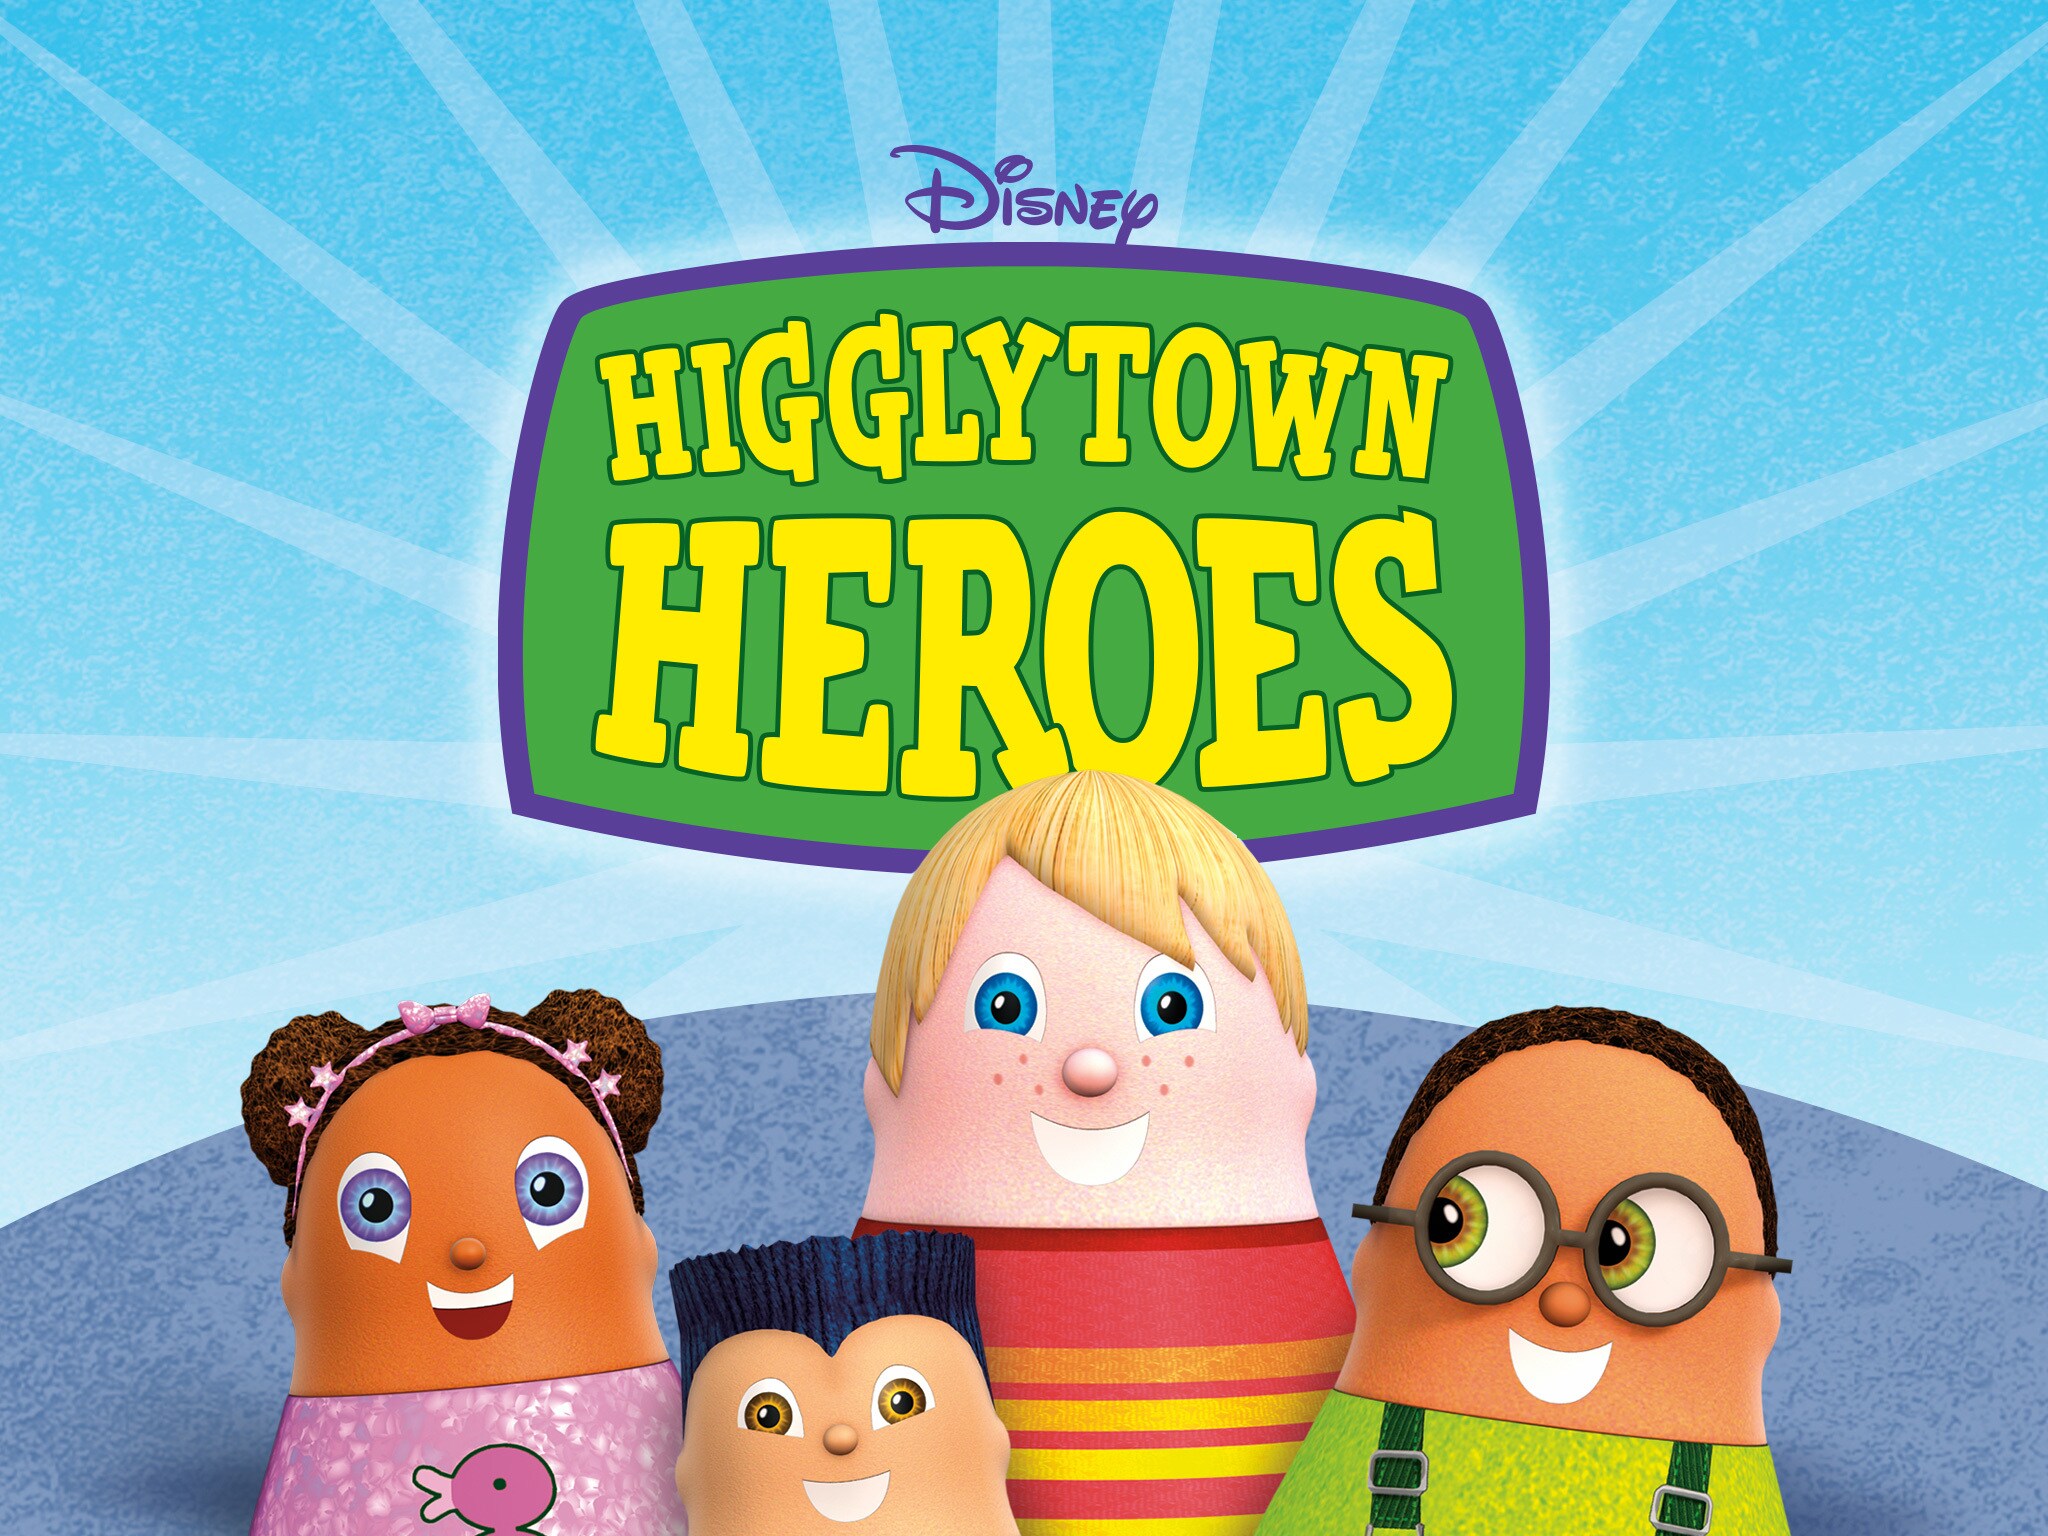 higglytown heroes make a hero game